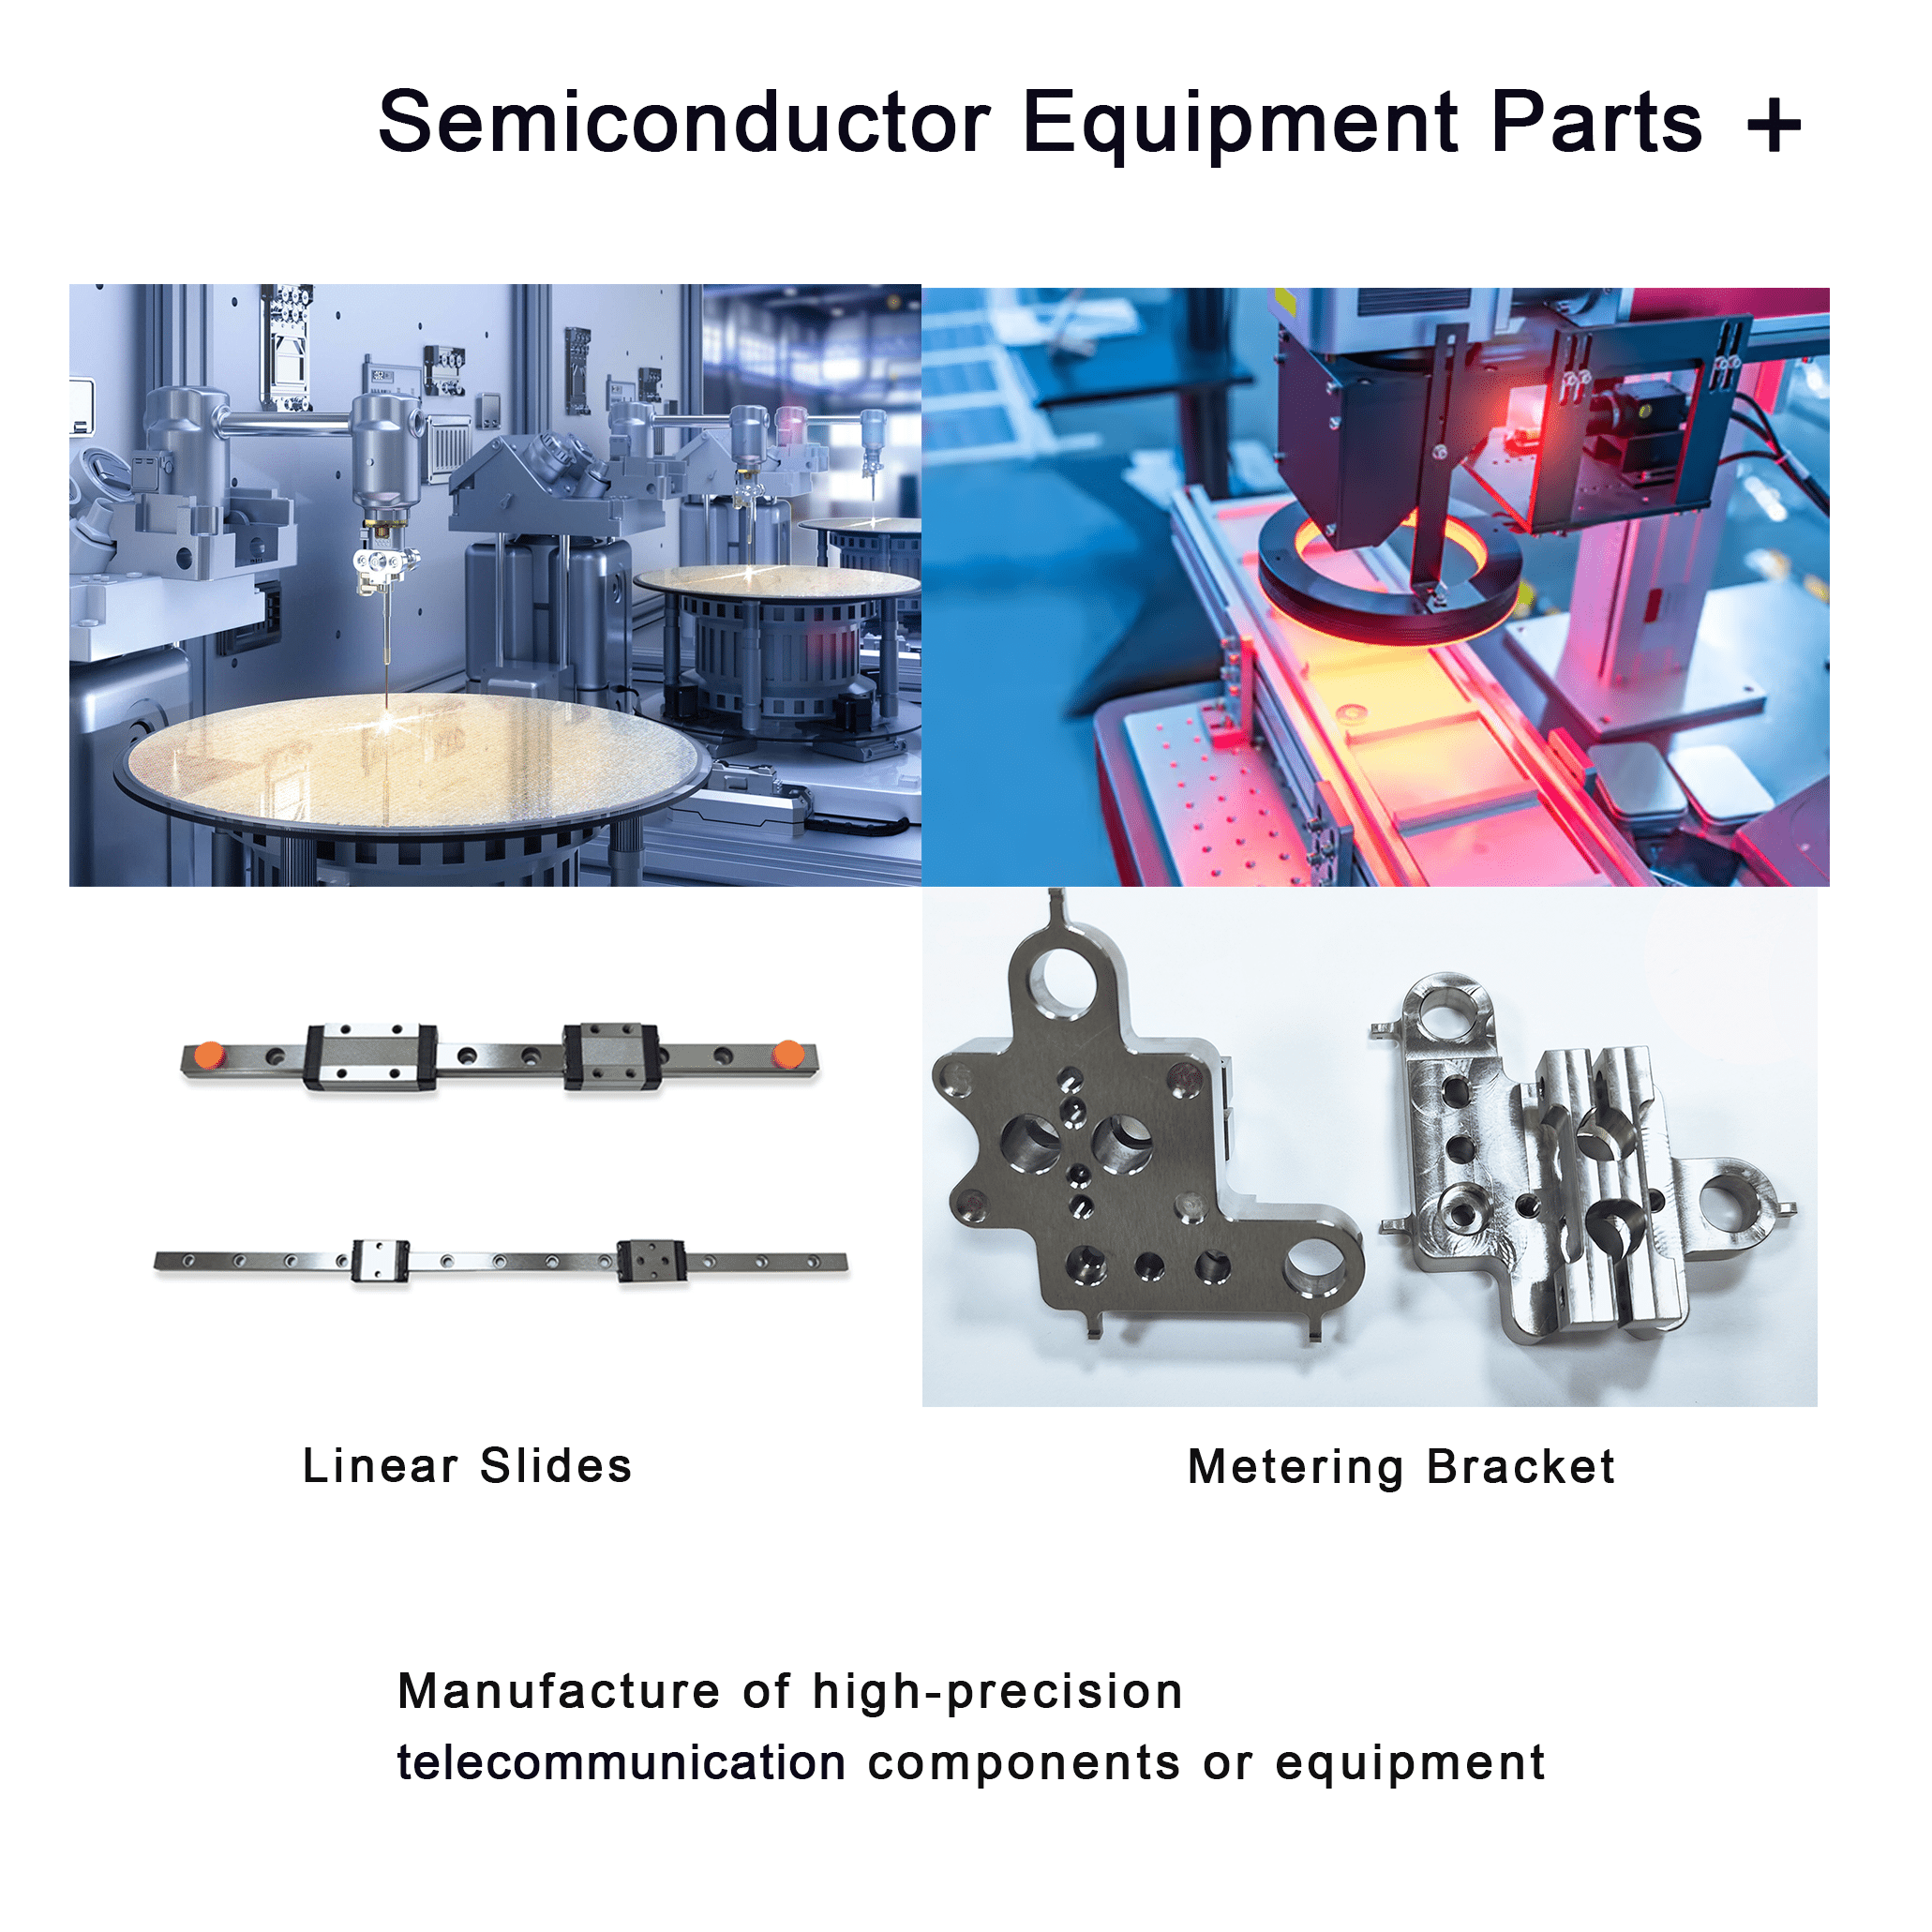 Semiconductor Equipment Part